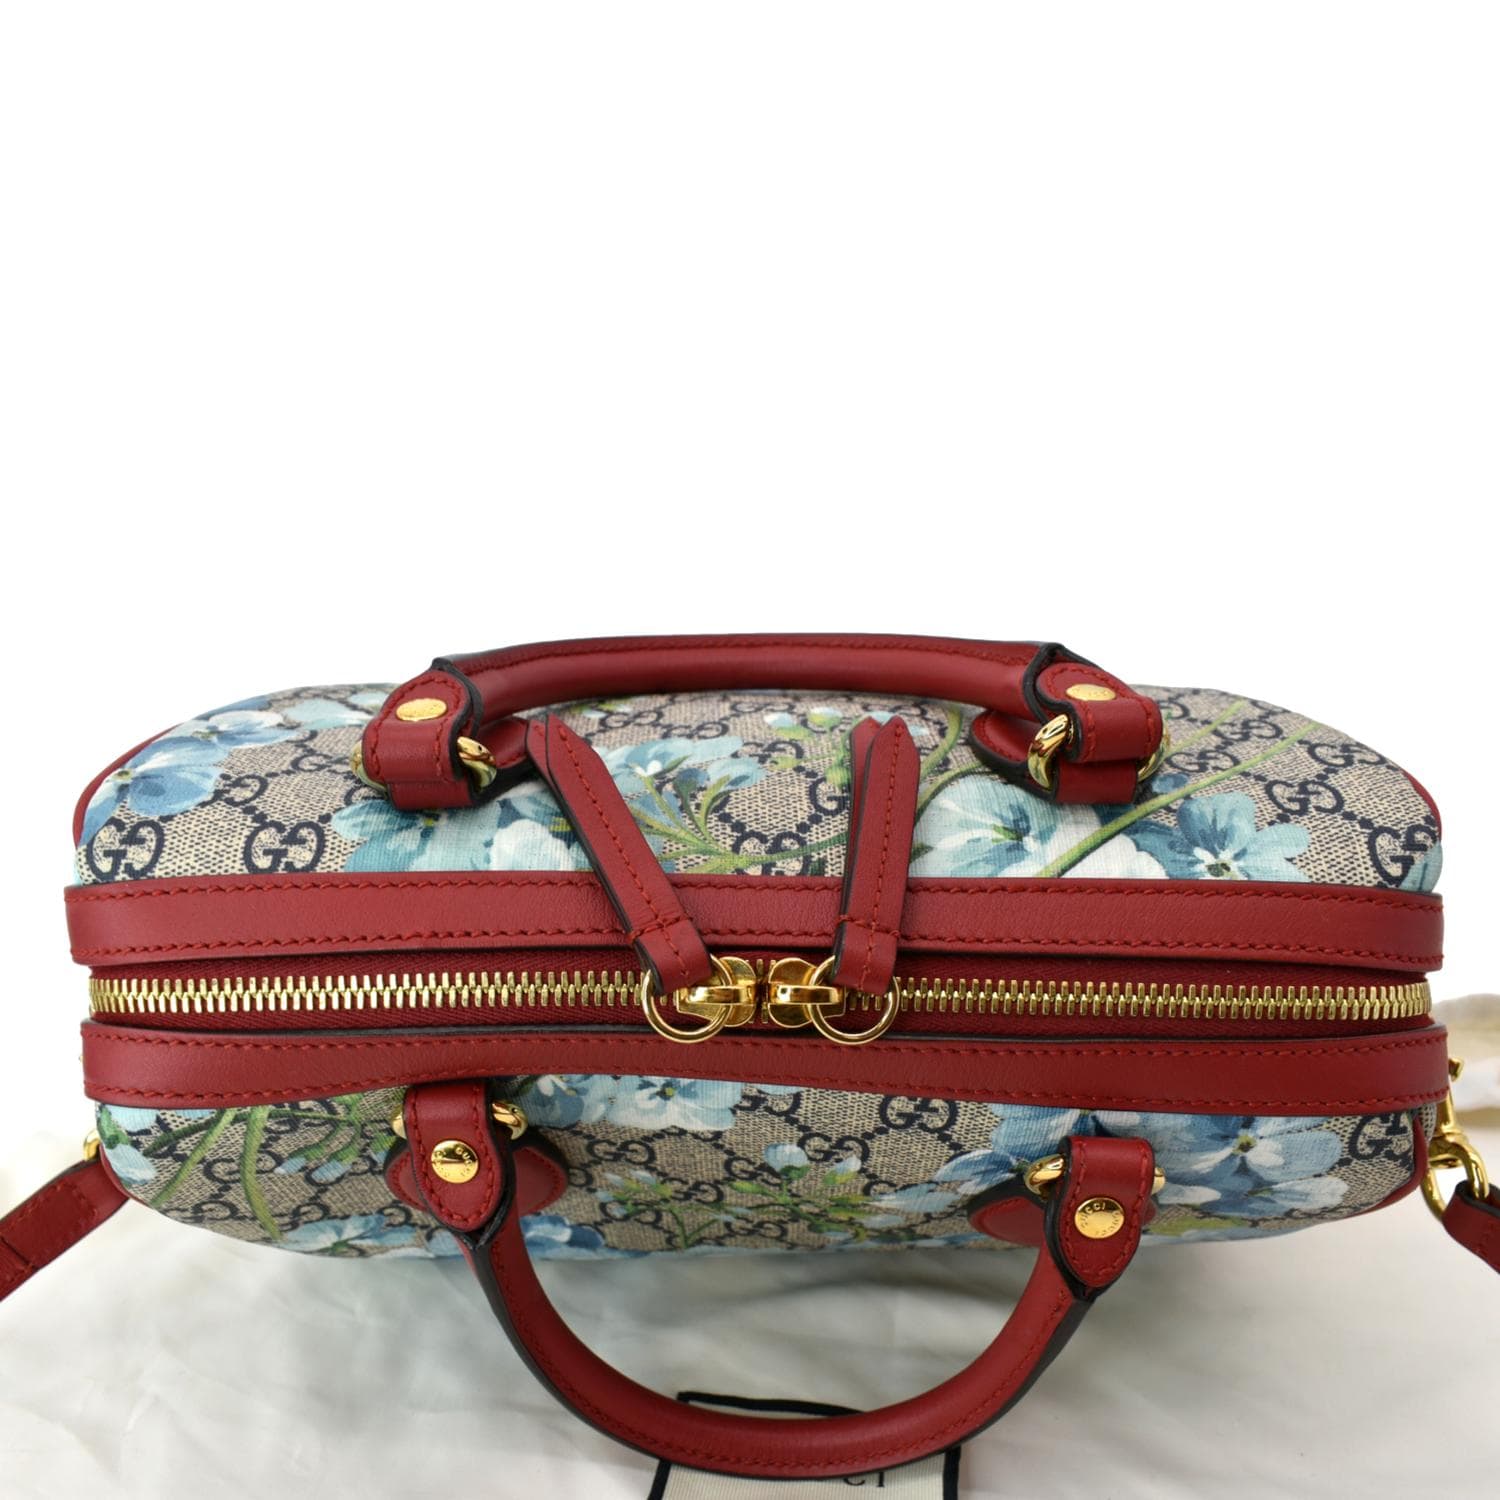 1pc Trendy Irregular Shape Boston Bag With Flower Print, Single